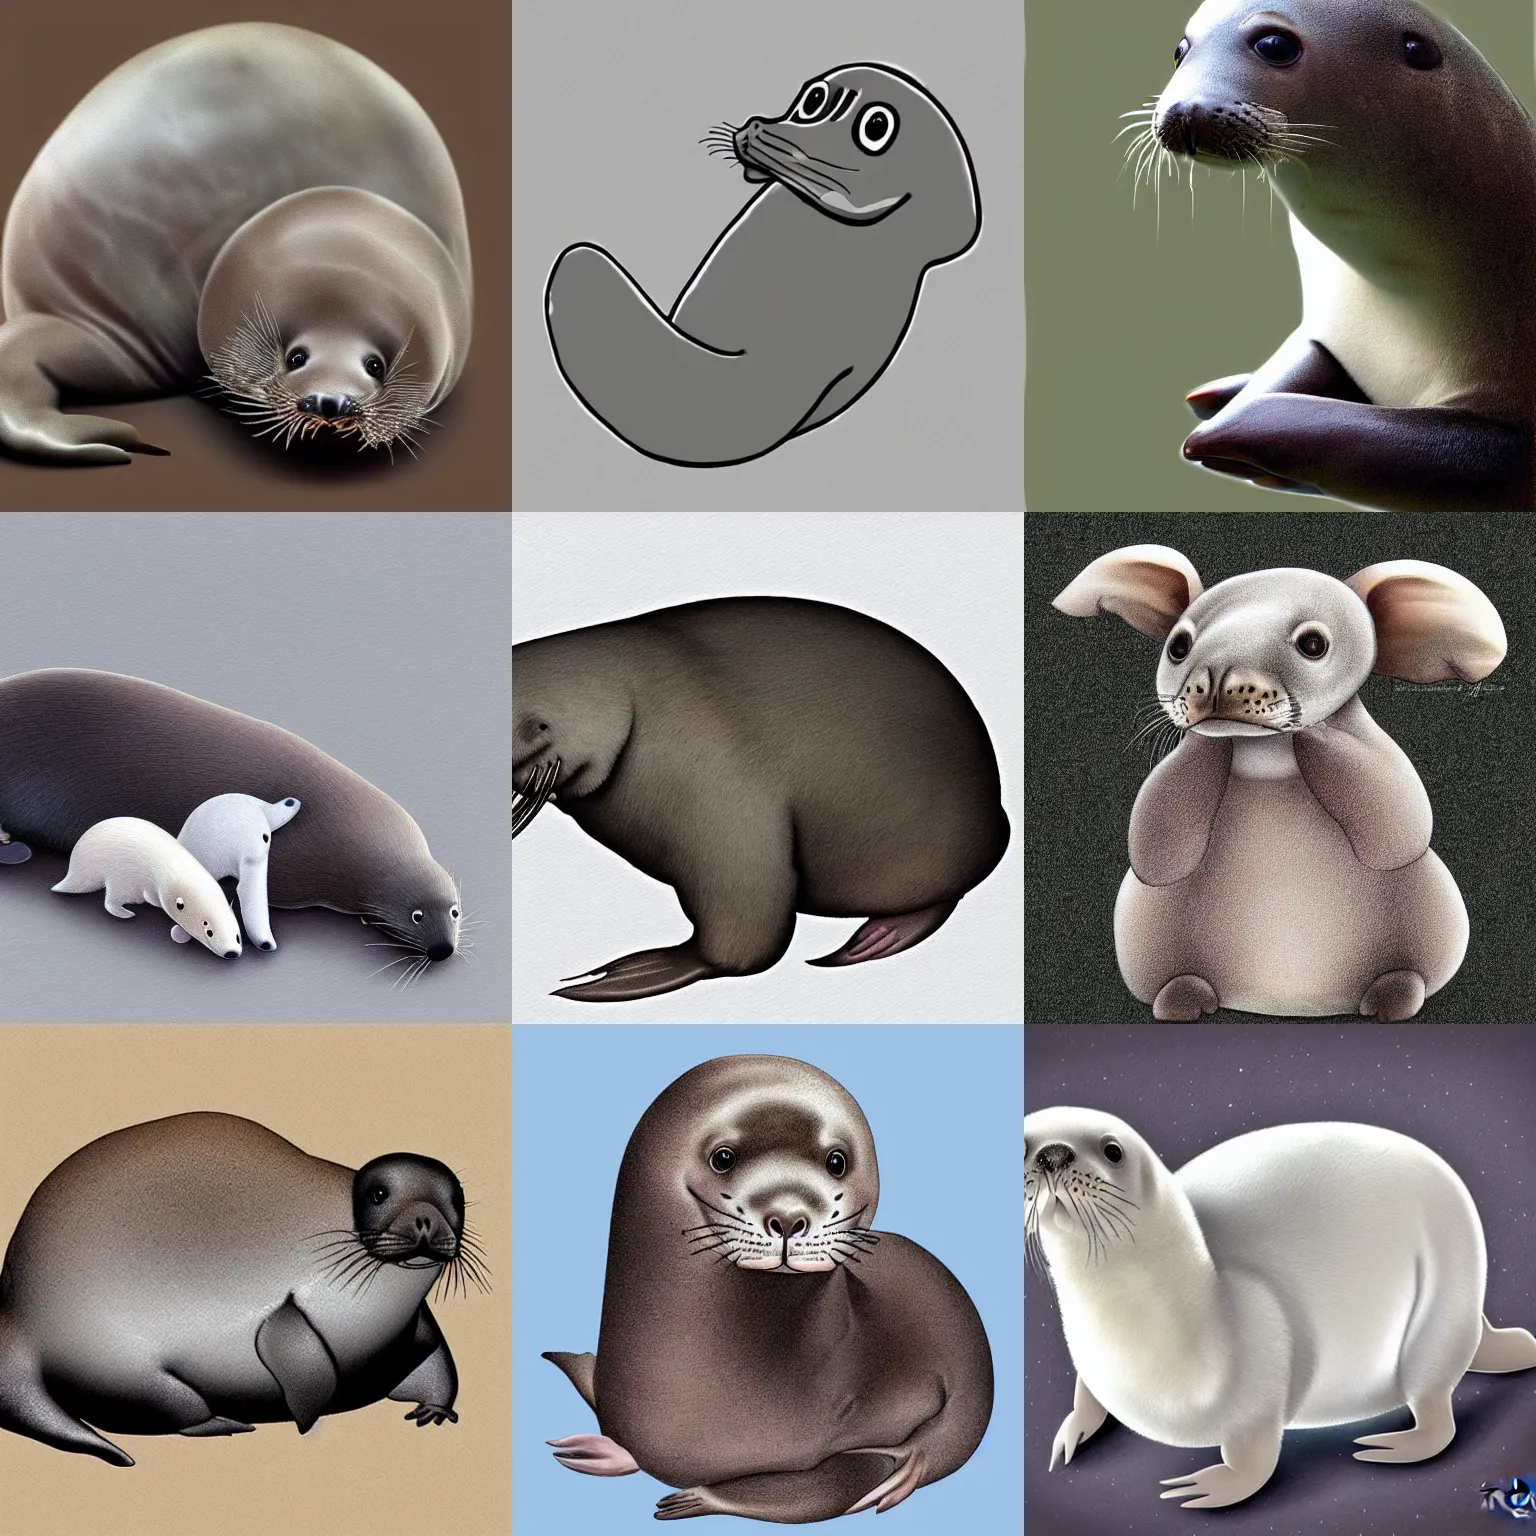 Prompt: seal platypus chimera, white fur, adorable, award-winning digital art